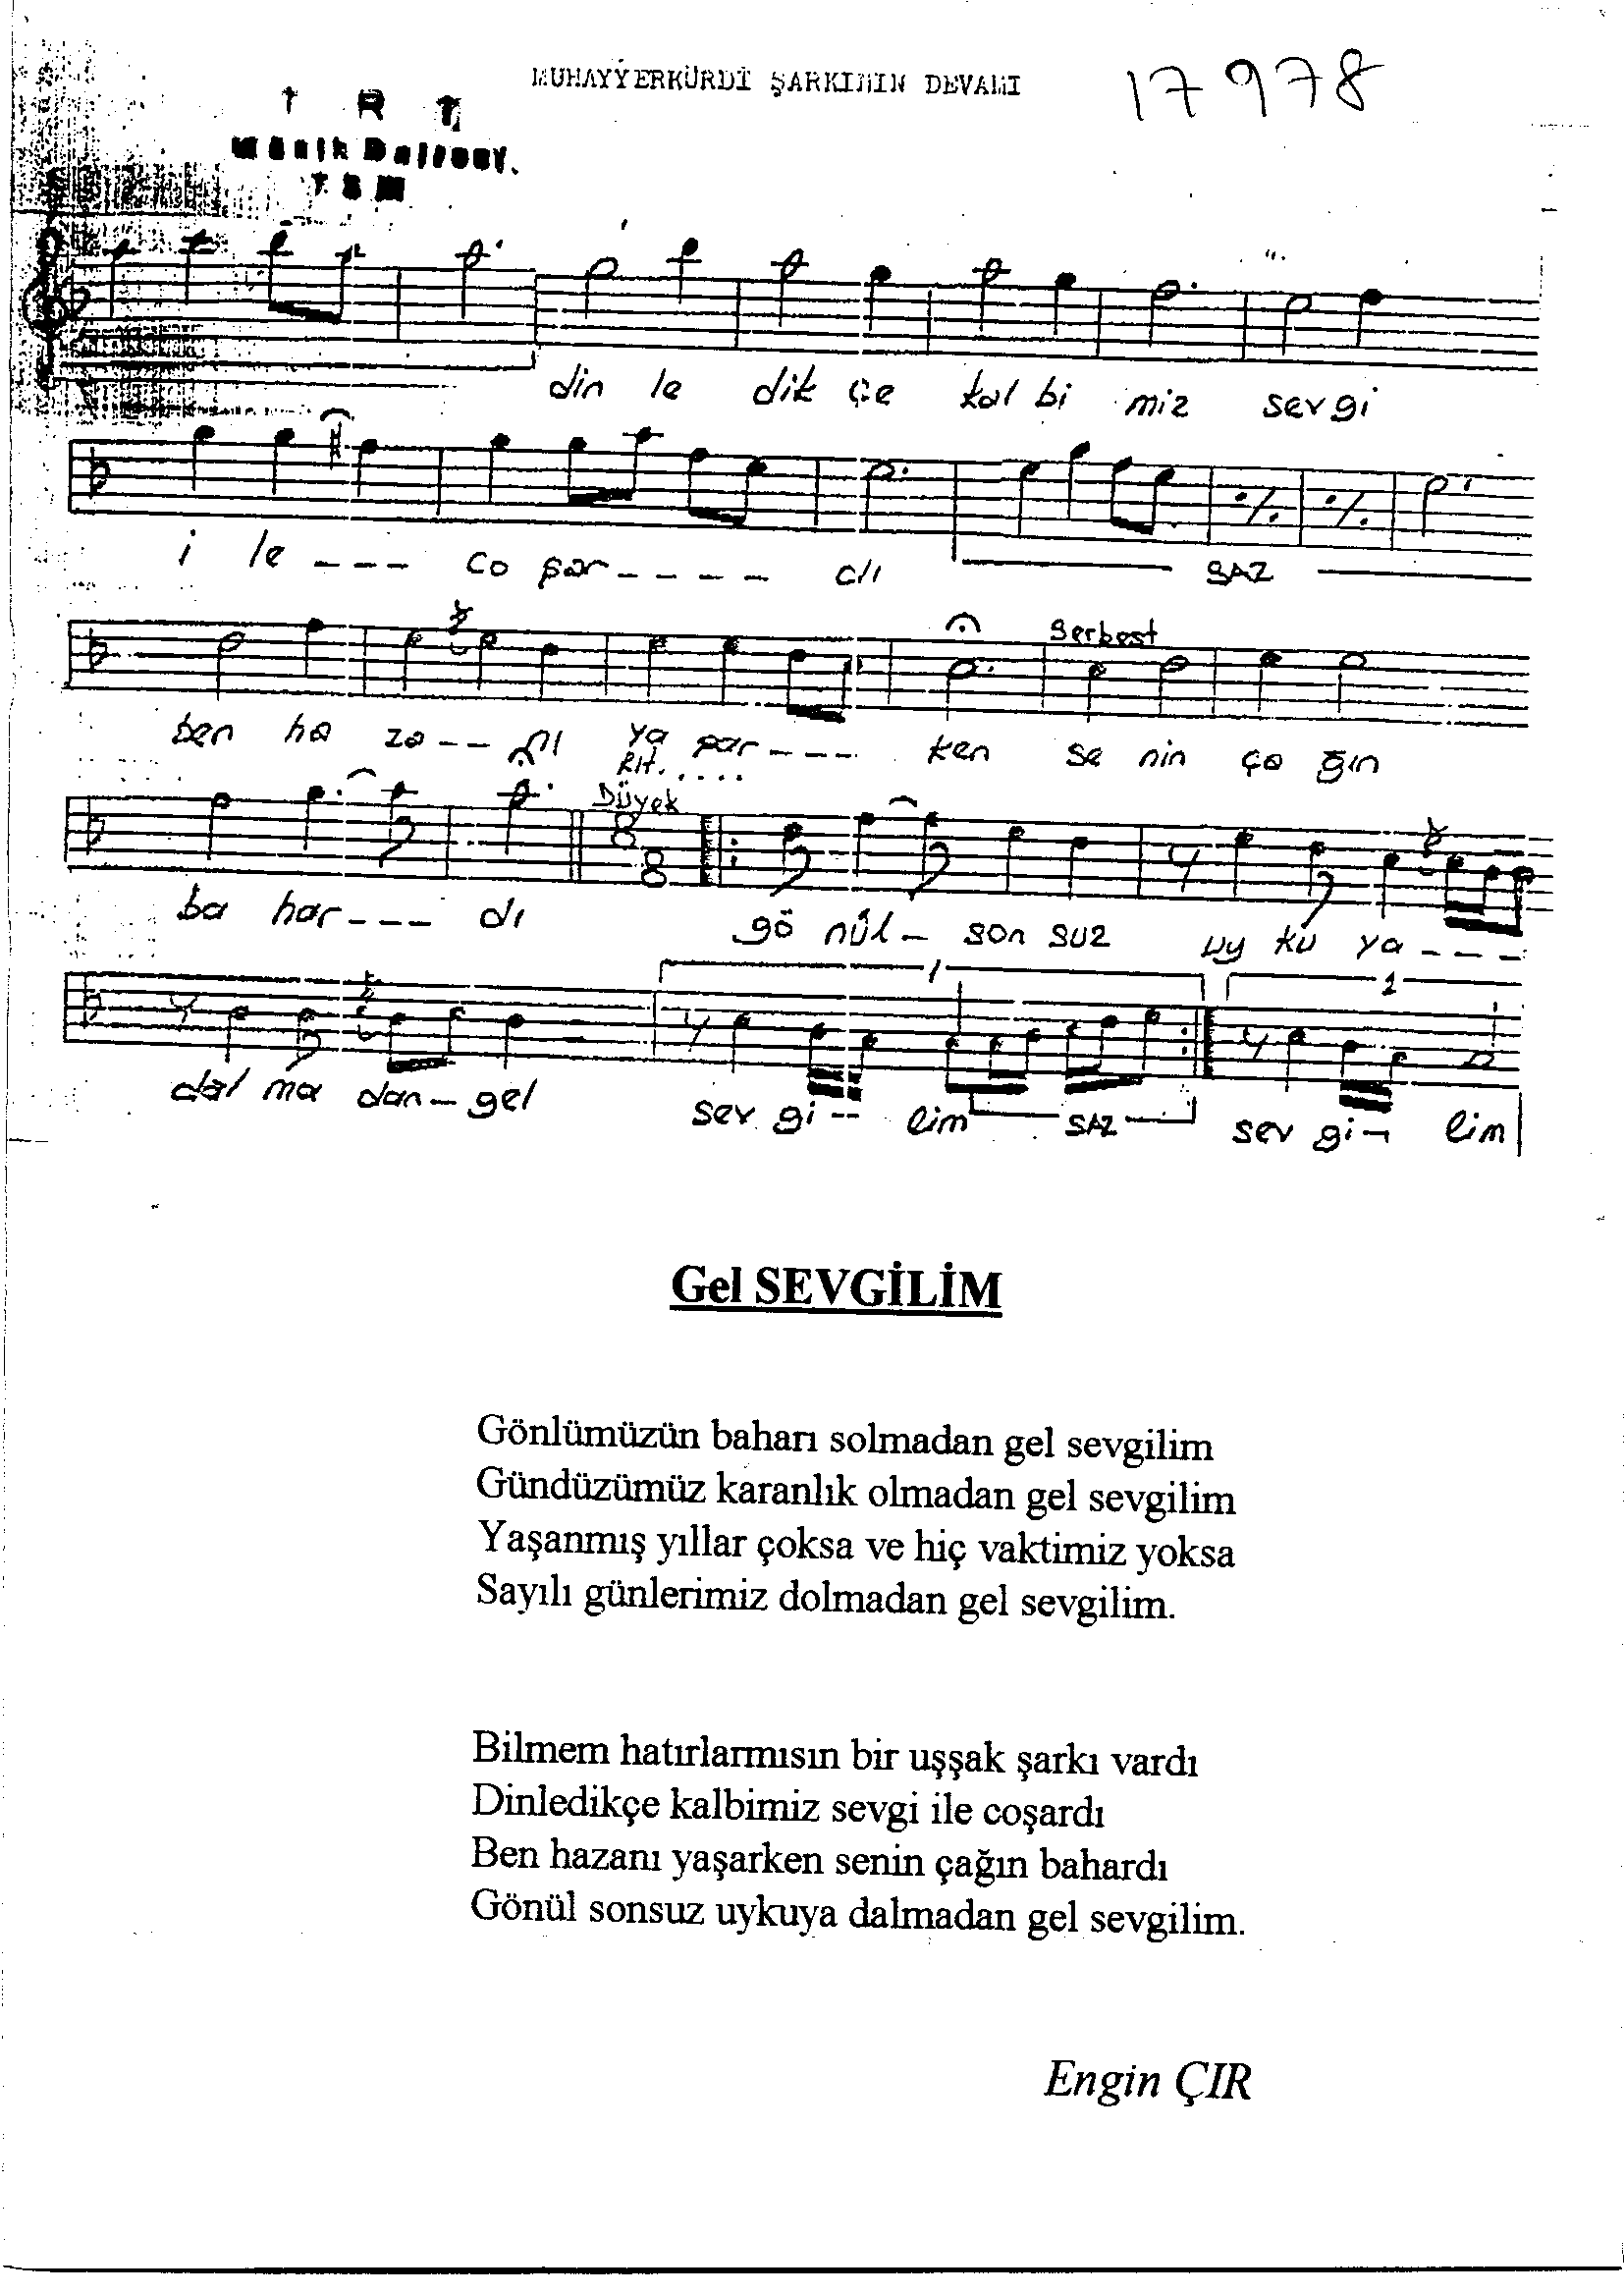 Muhayyer Kürdî - Şarkı - A.Gâni Takmaz - Sayfa 2